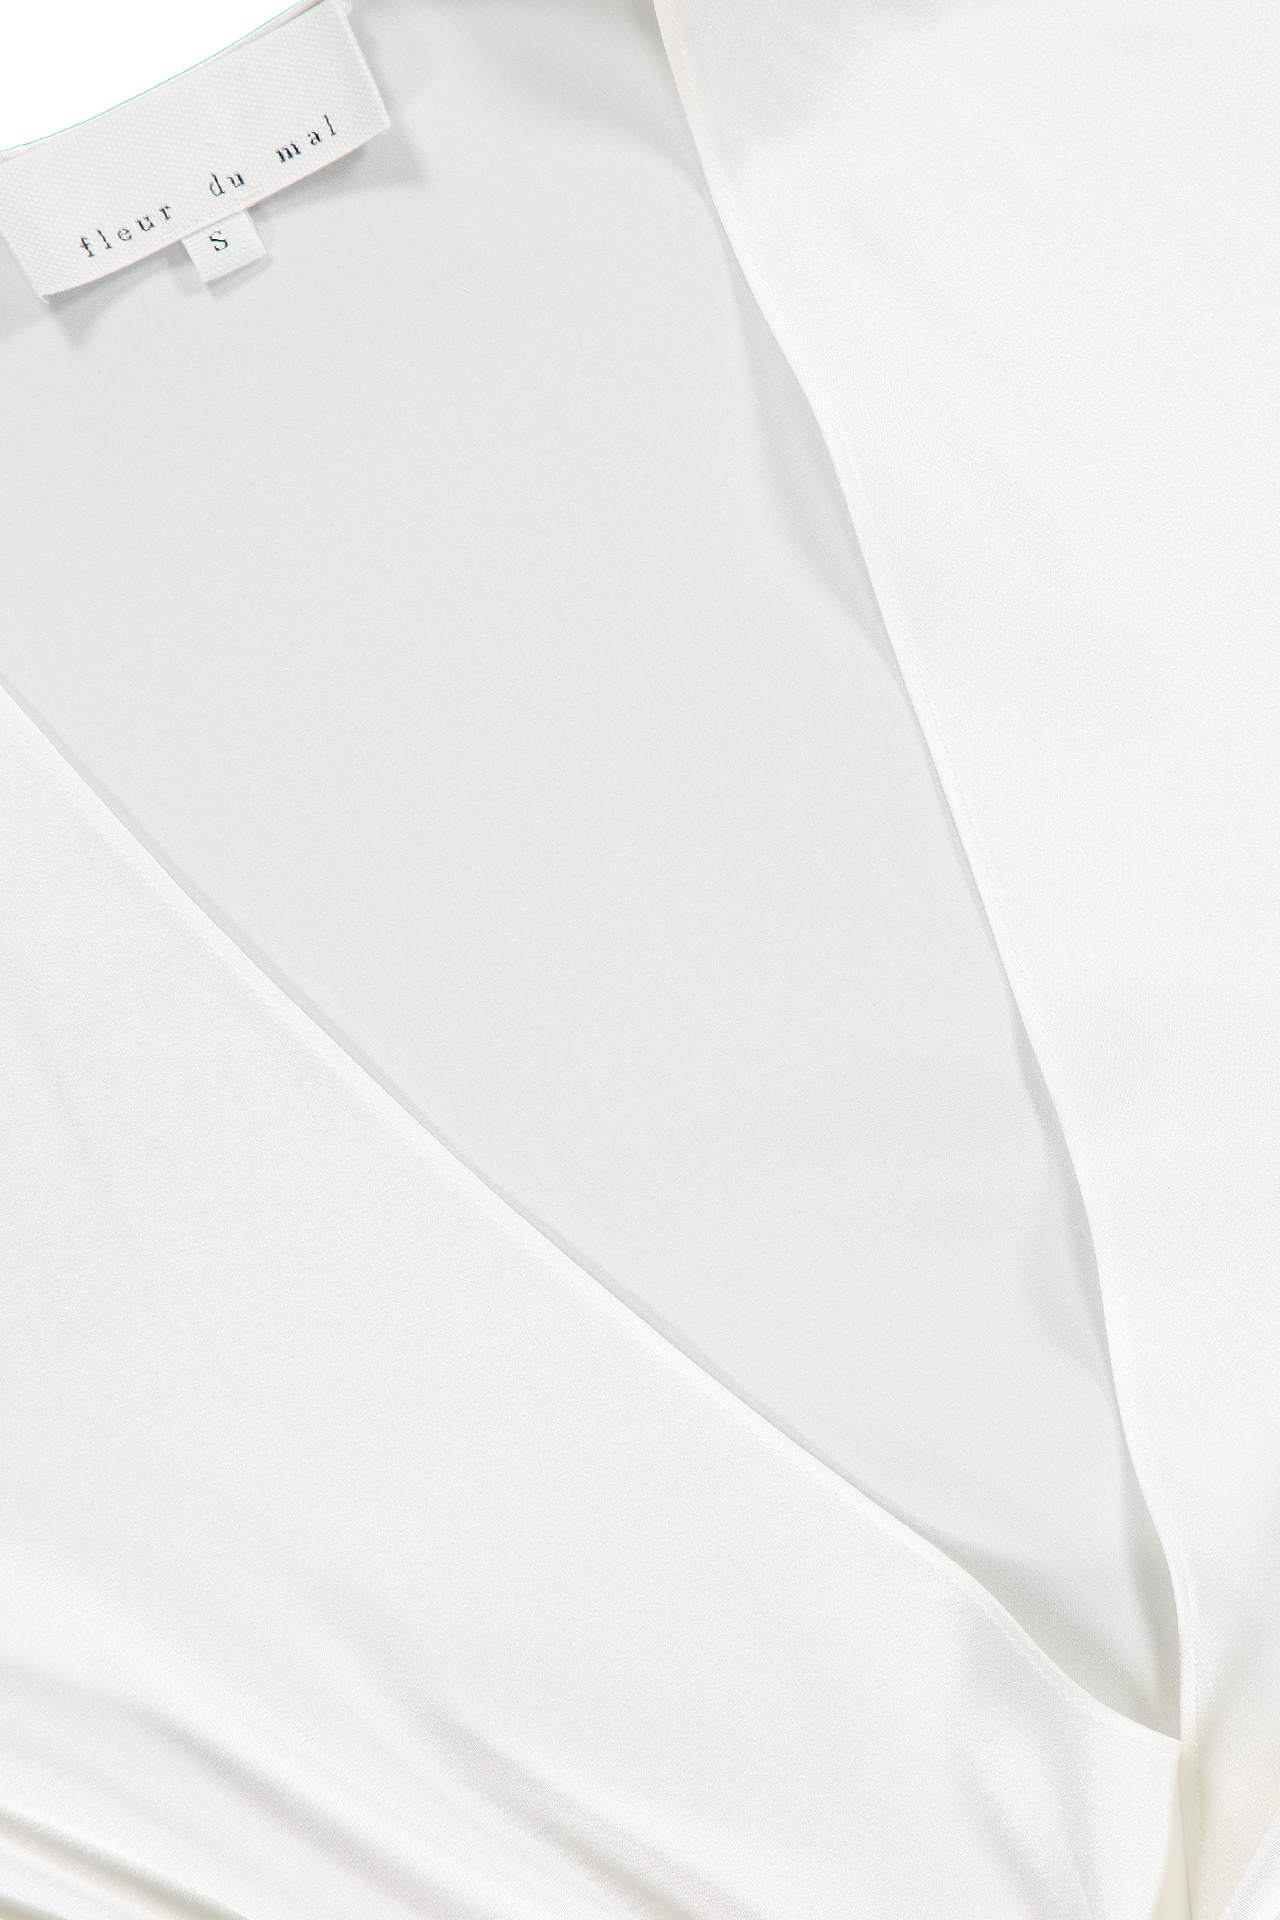 Fleur Du Mal Washable Silk Robe White Collar Detail Image (6555860893811)